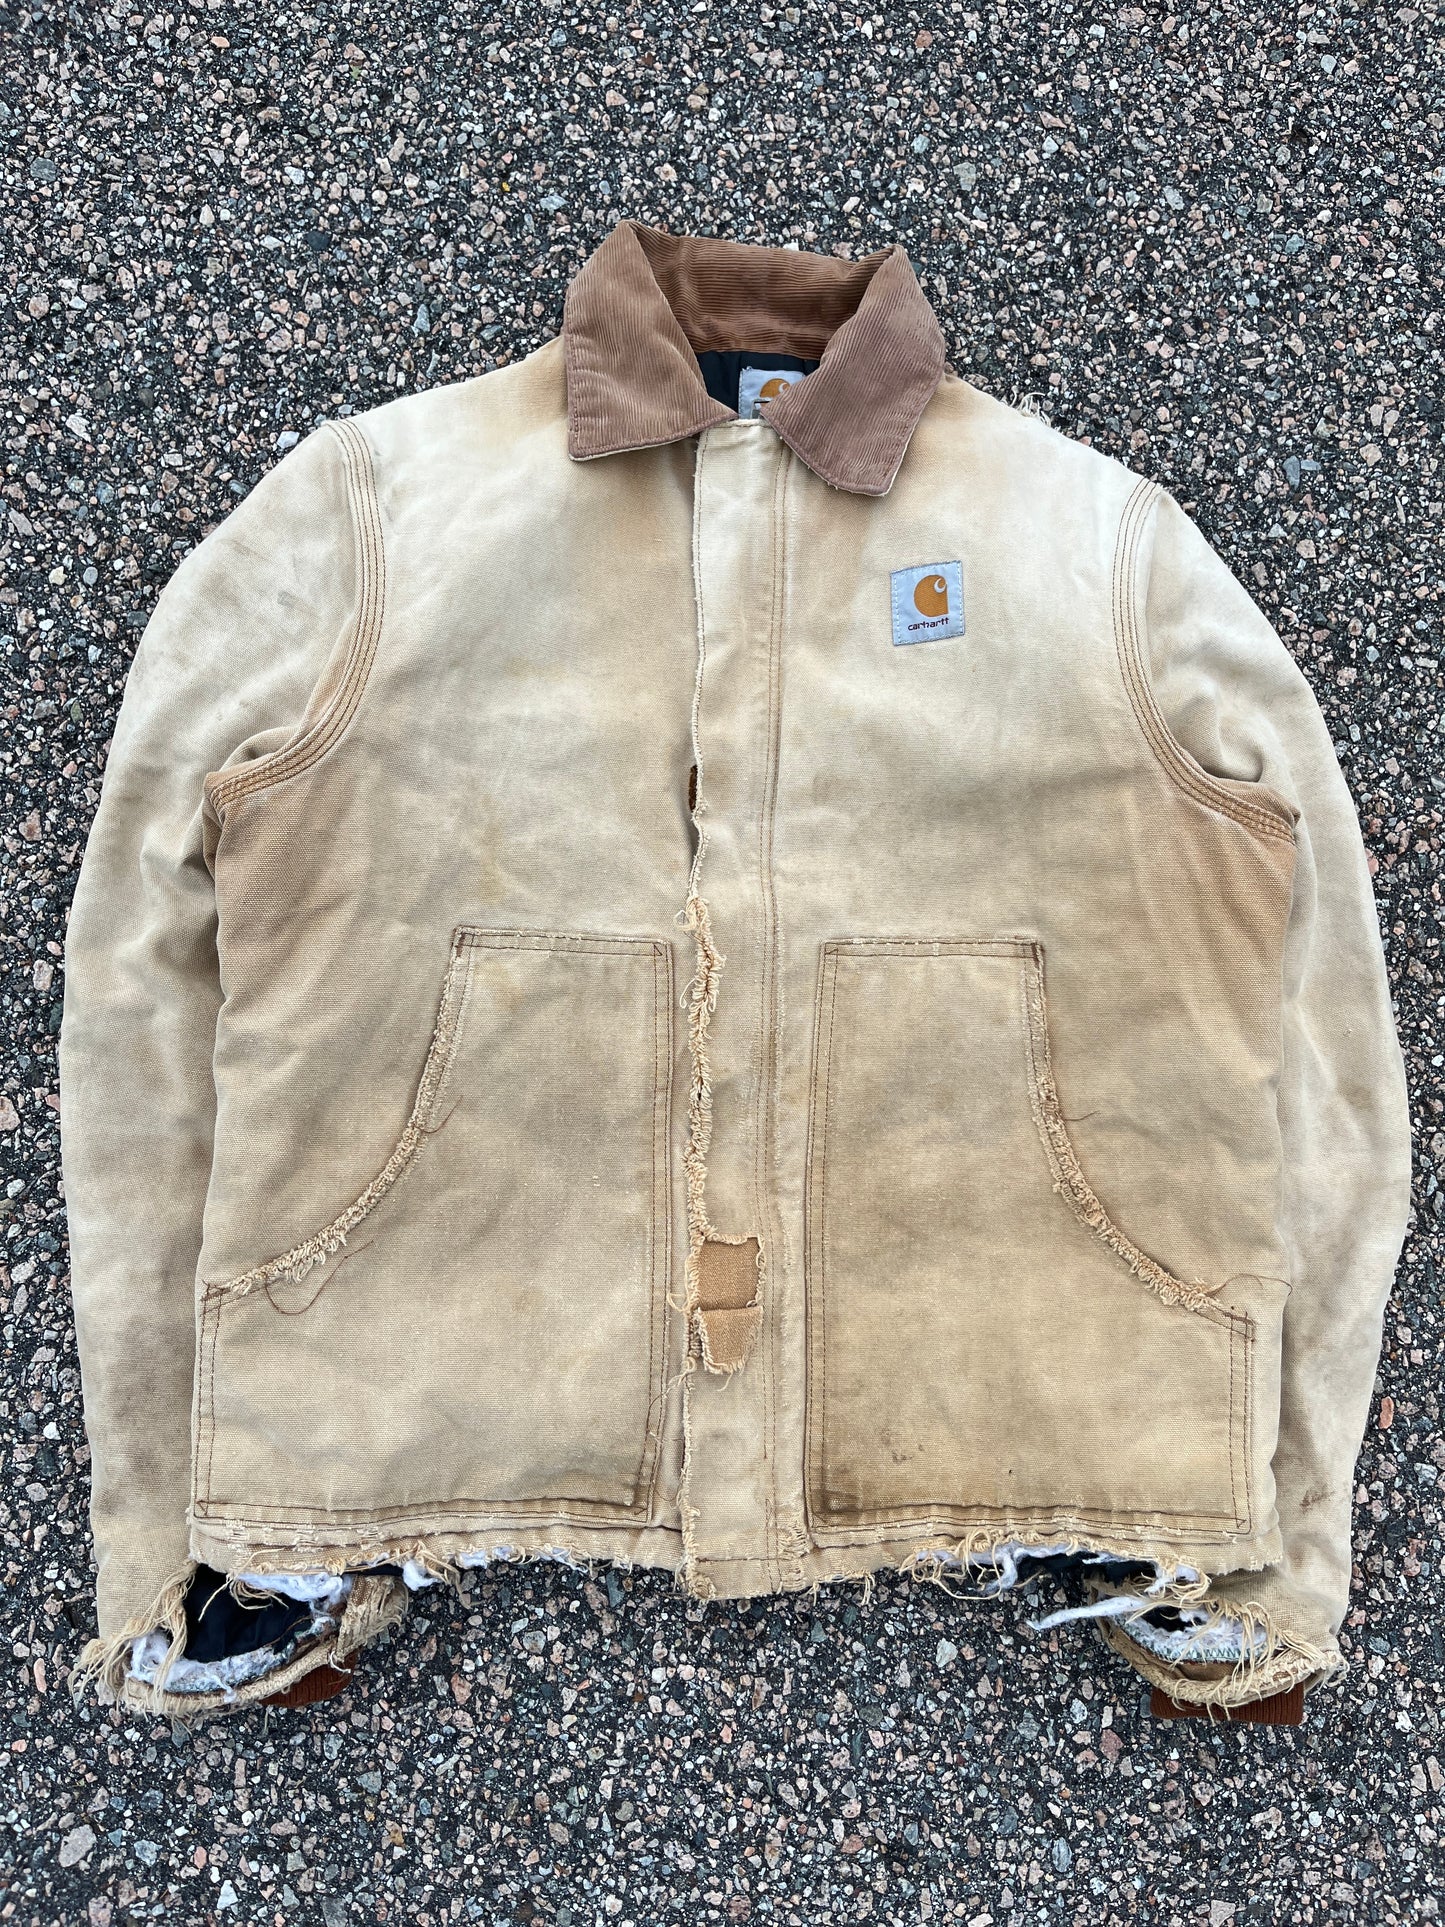 Faded and Distressed Tan Carhartt Arctic Jacket - Medium